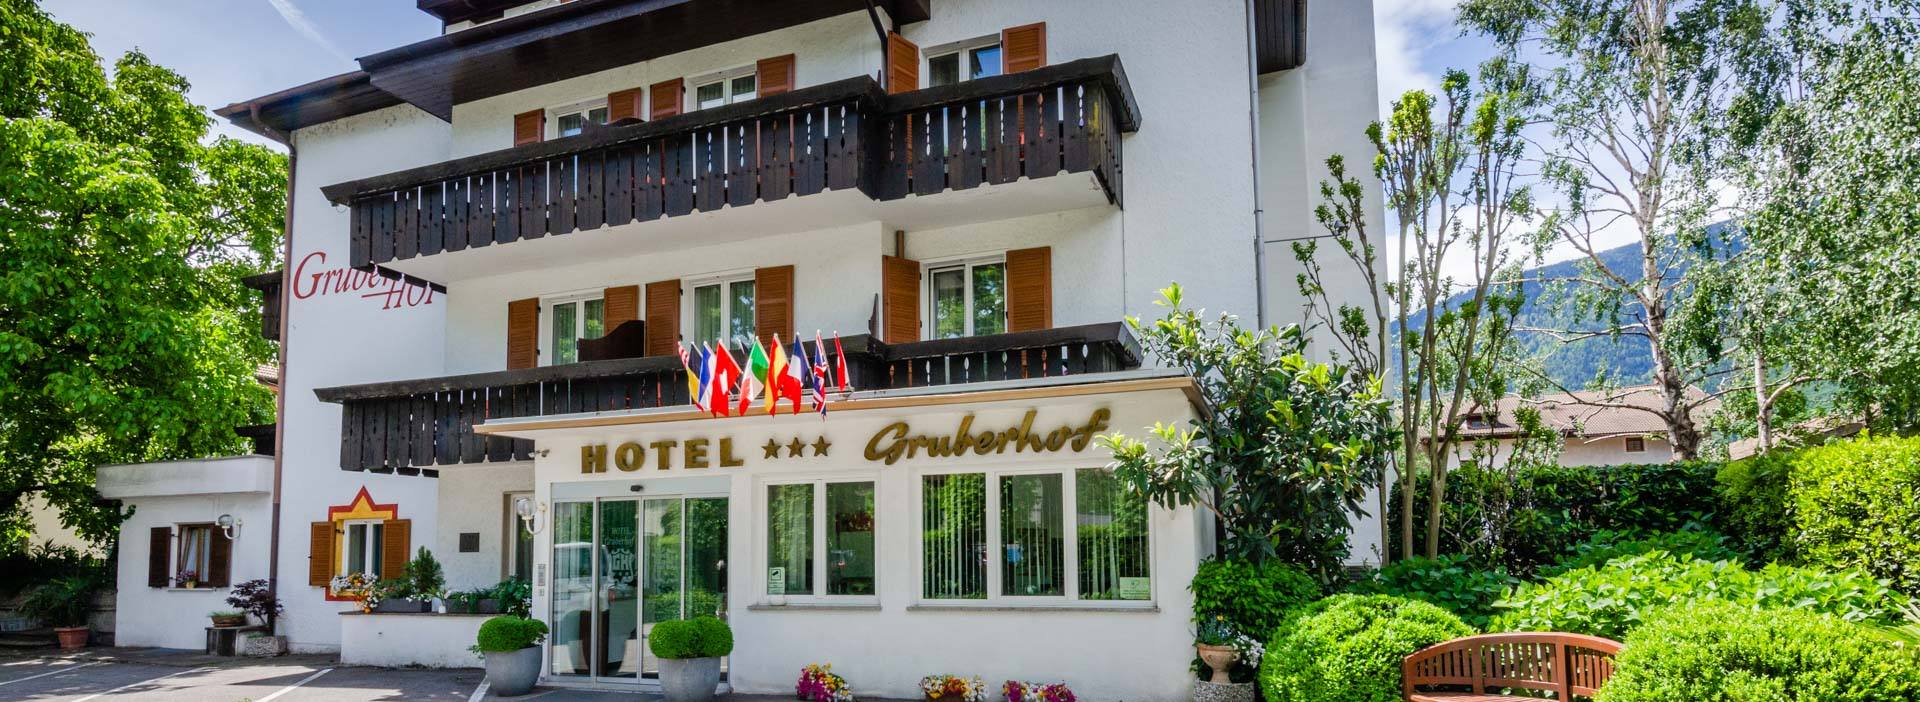 Hotel Gruberhof